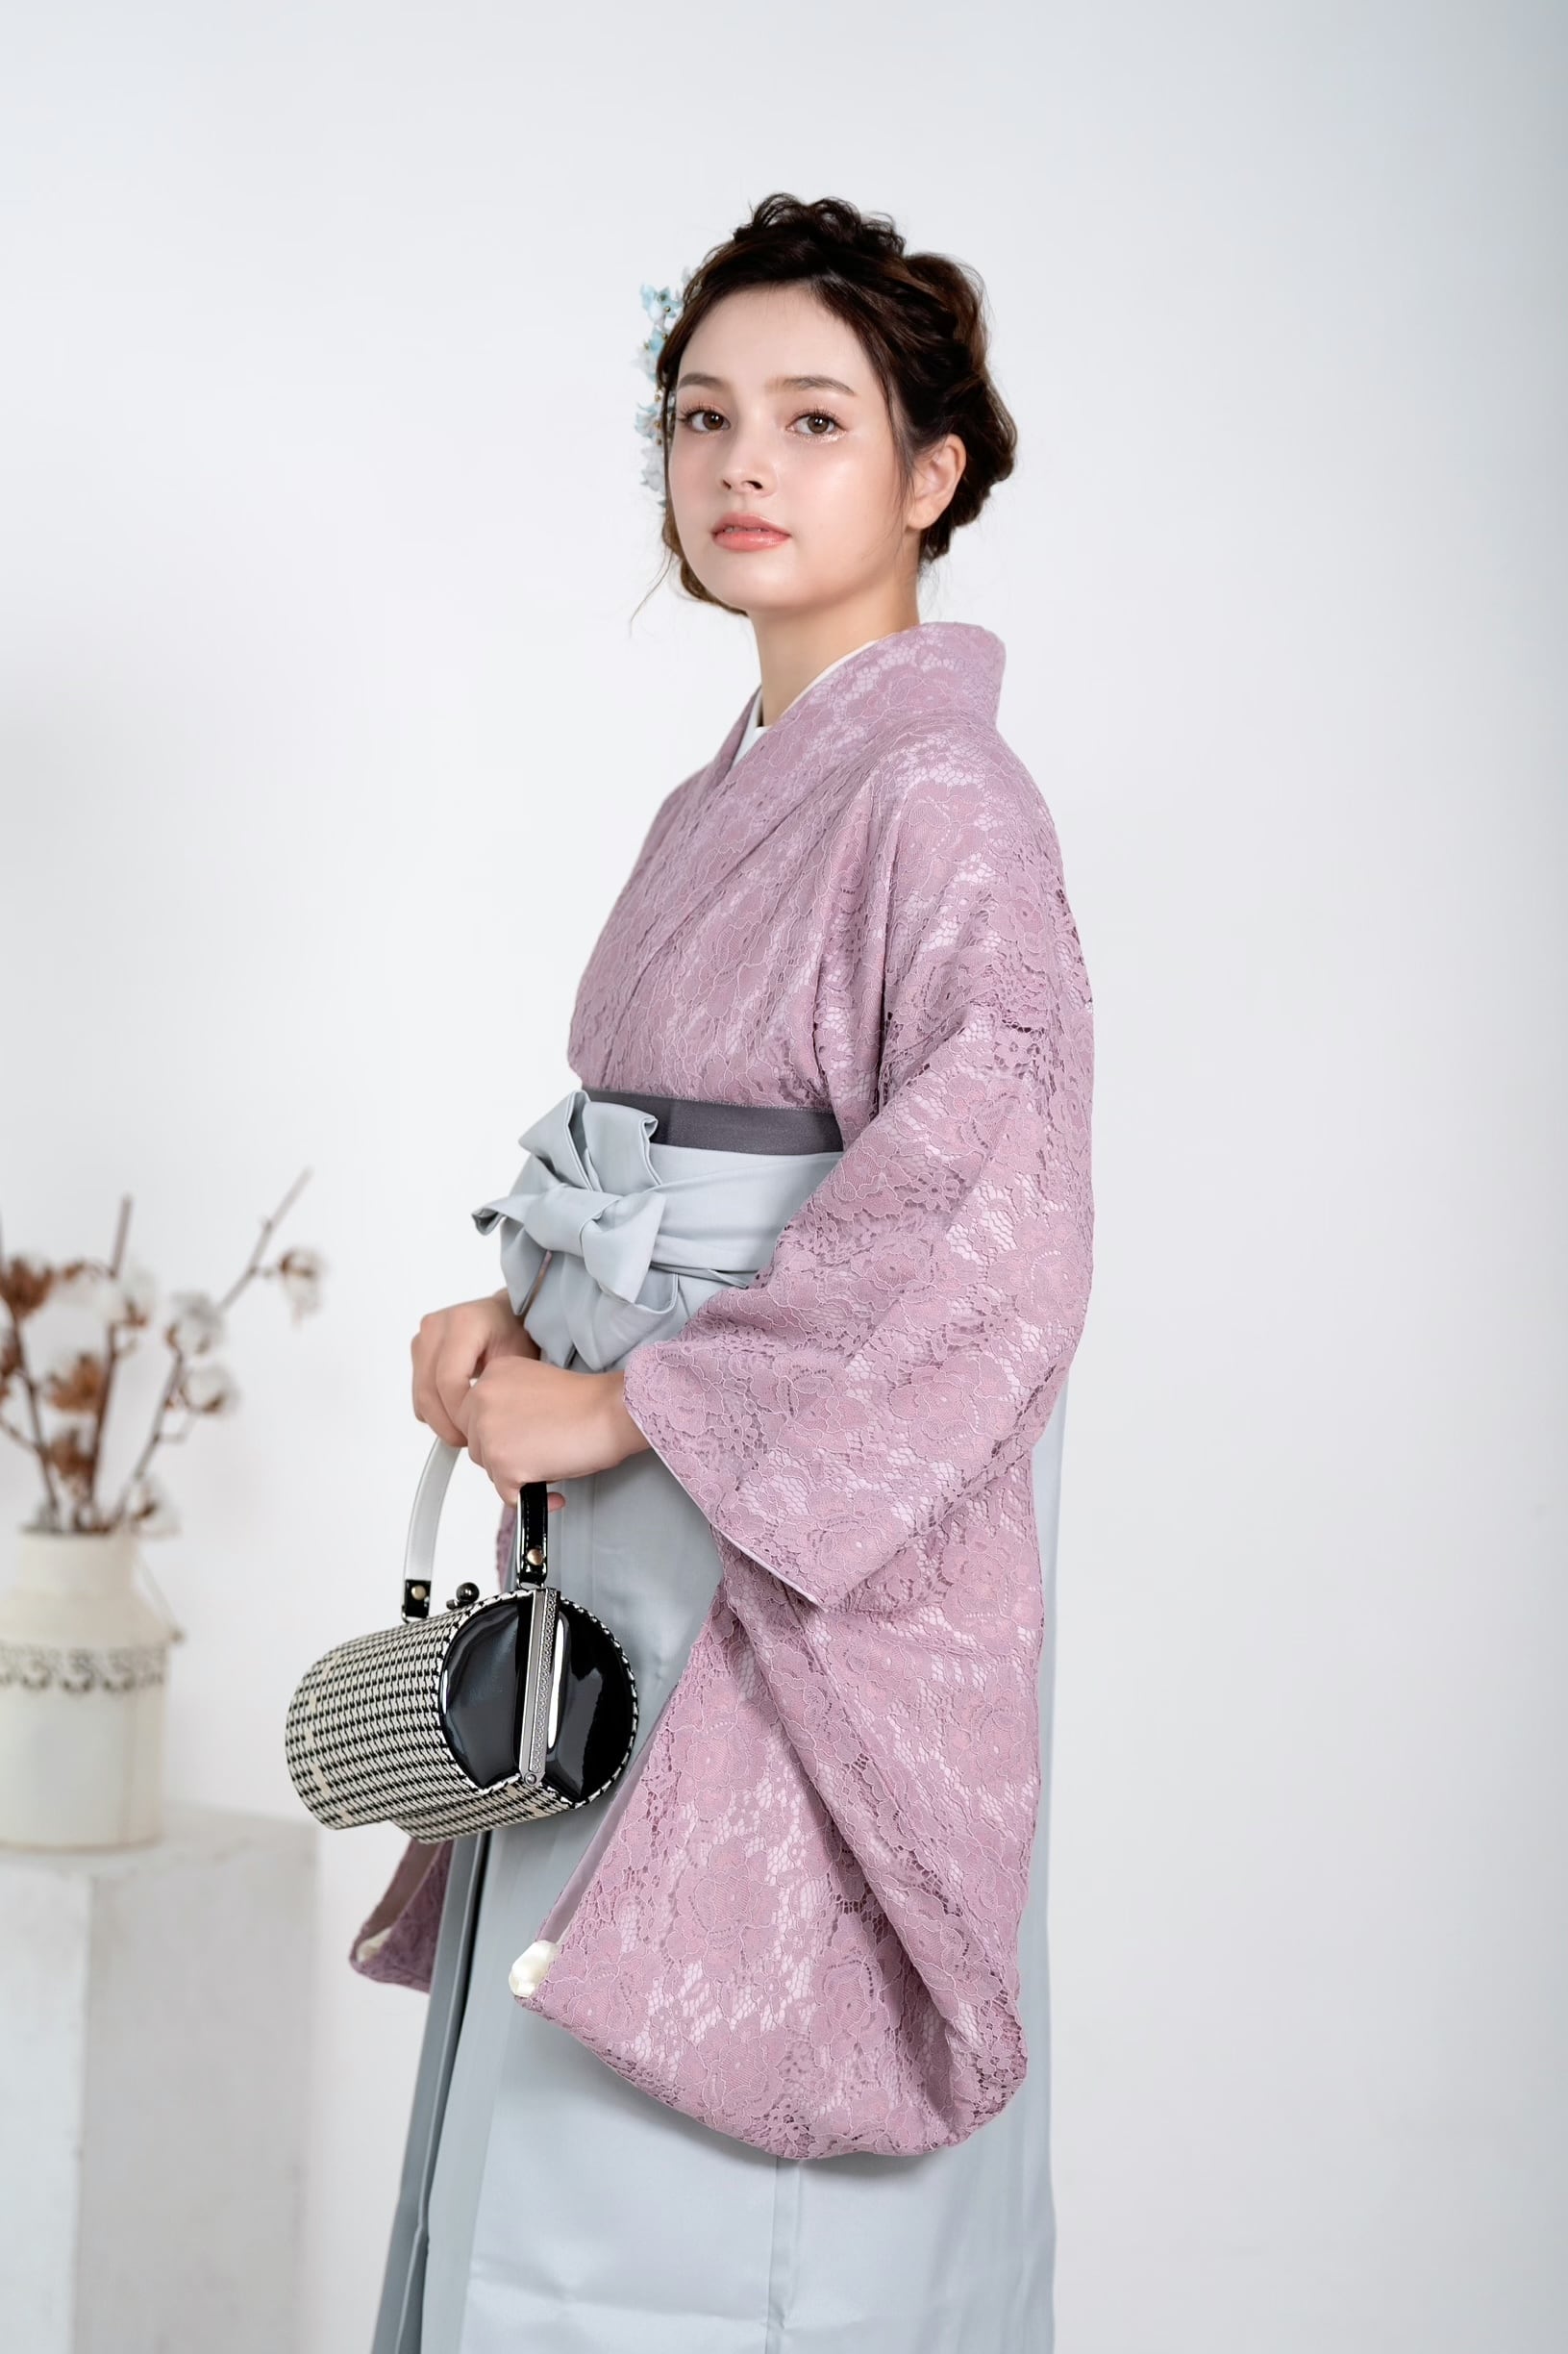 Kimono Sienne 卒業式袴3点セット レース二尺袖 くすみピンクレース×グレー 二尺袖着物 袴 卒業式 | Kimono Sienne